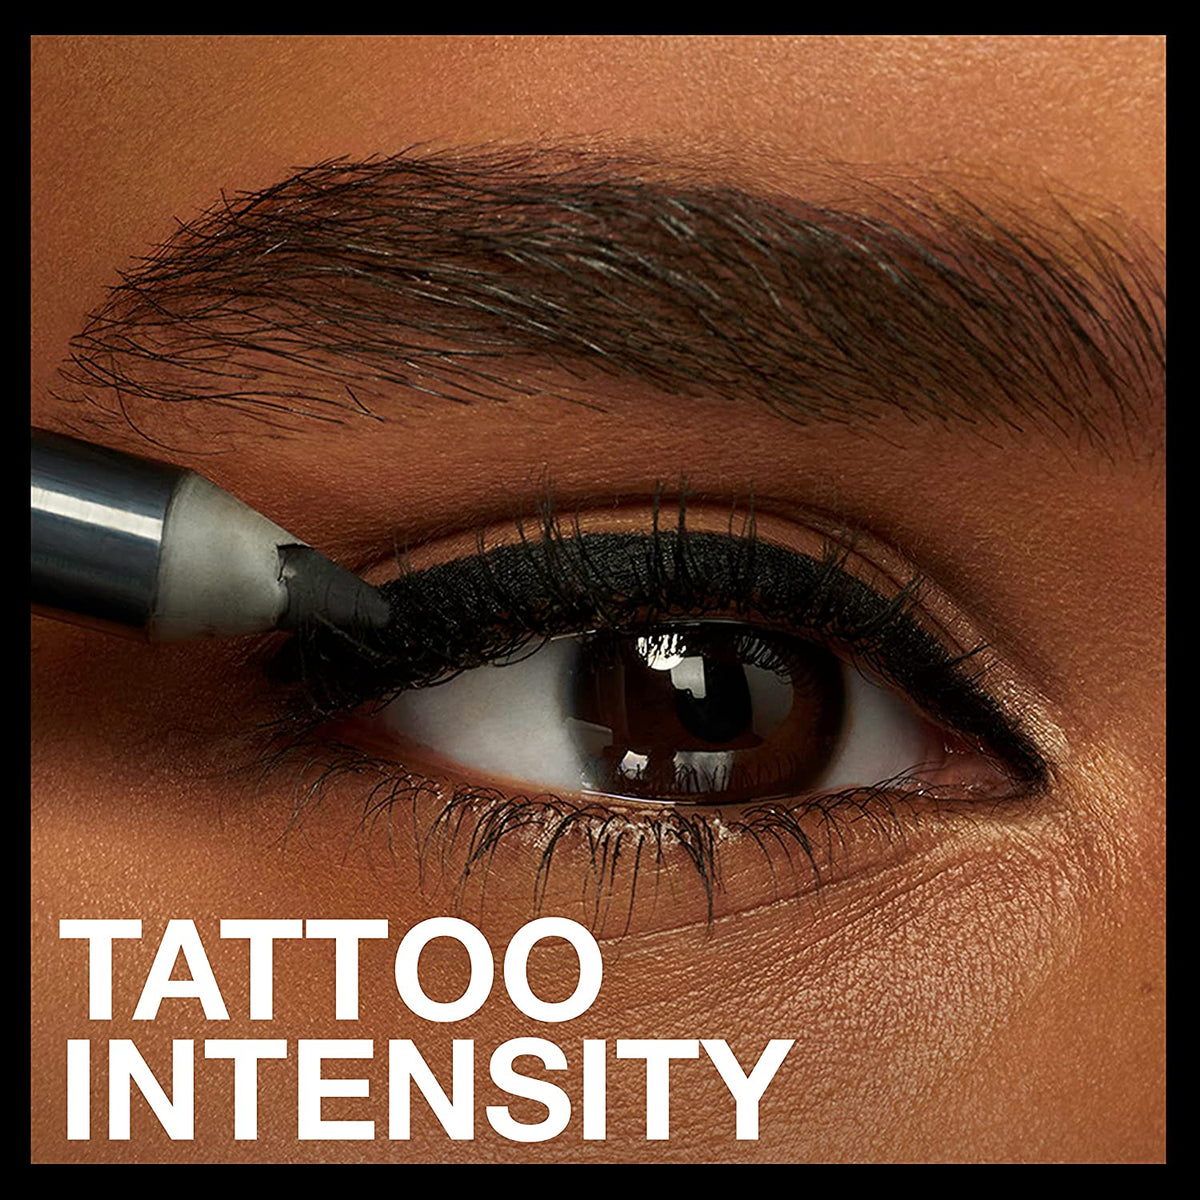 Maybelline TattooStudio Sharpenable Gel Pencil Waterproof Longwear Eyeliner, Deep Onyx